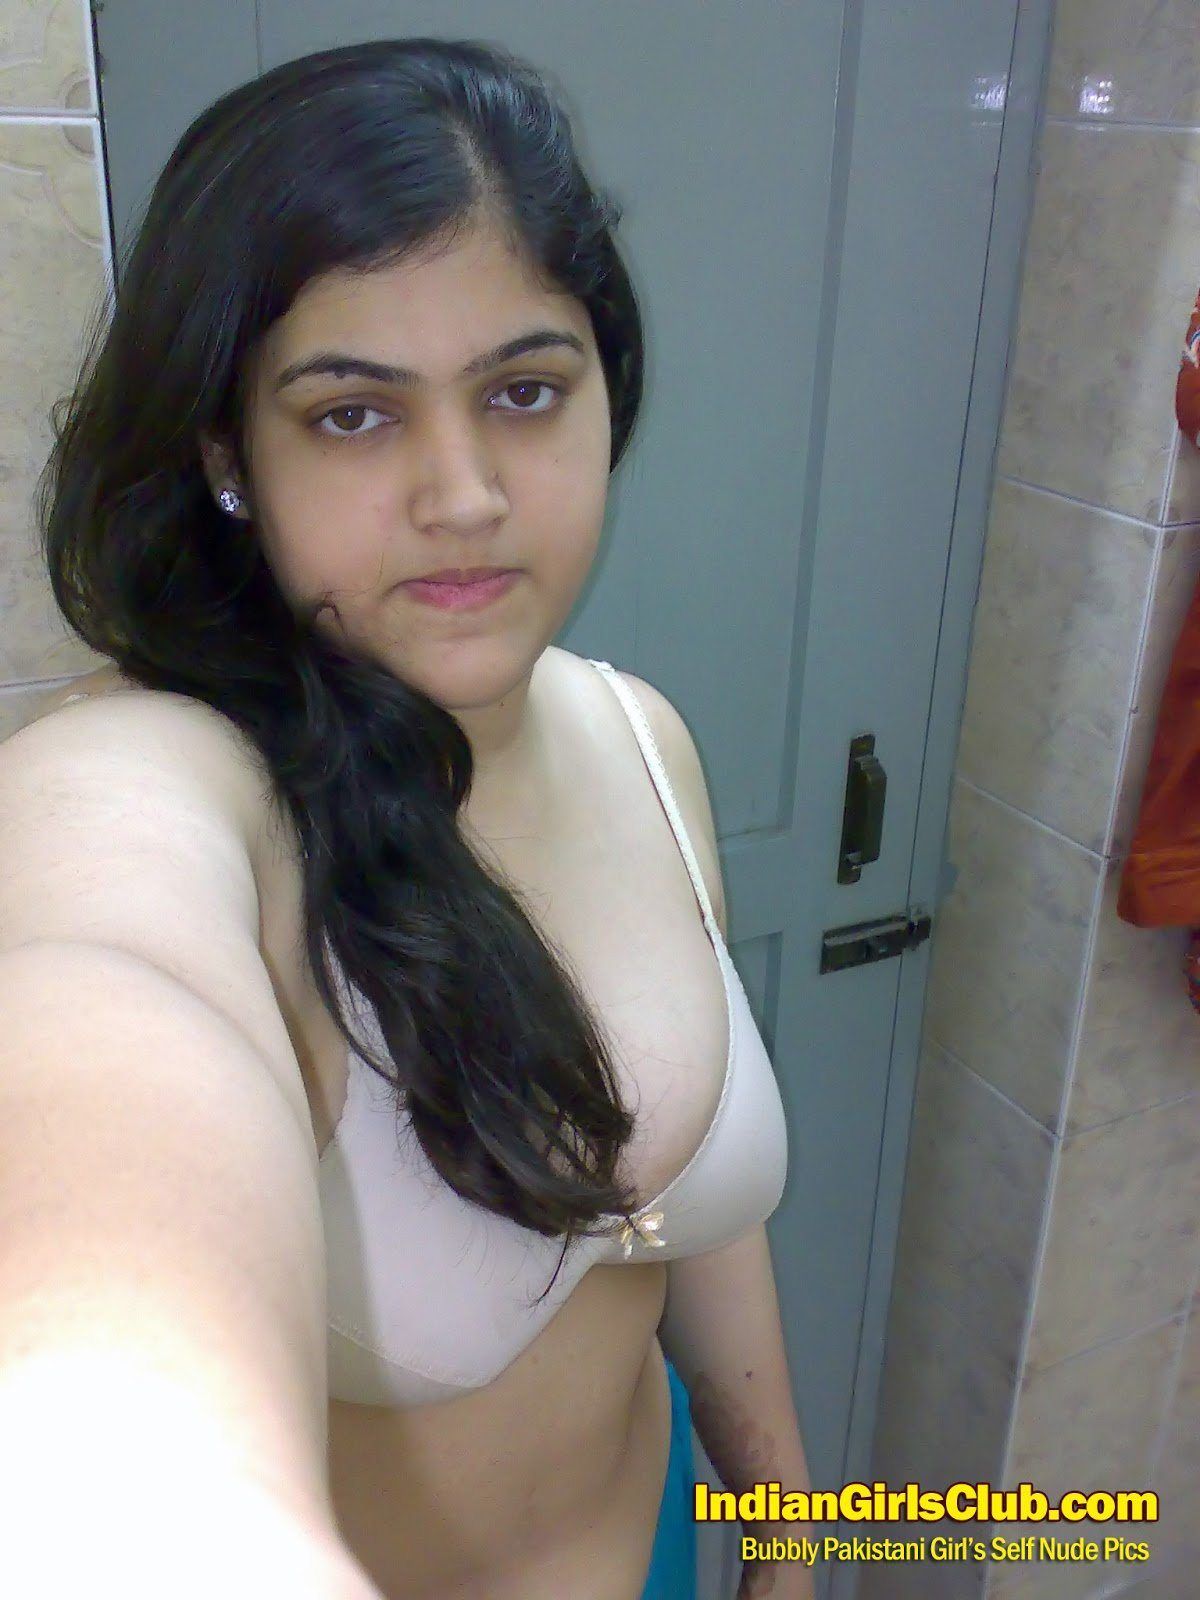 Pakistani girl friend nudepic